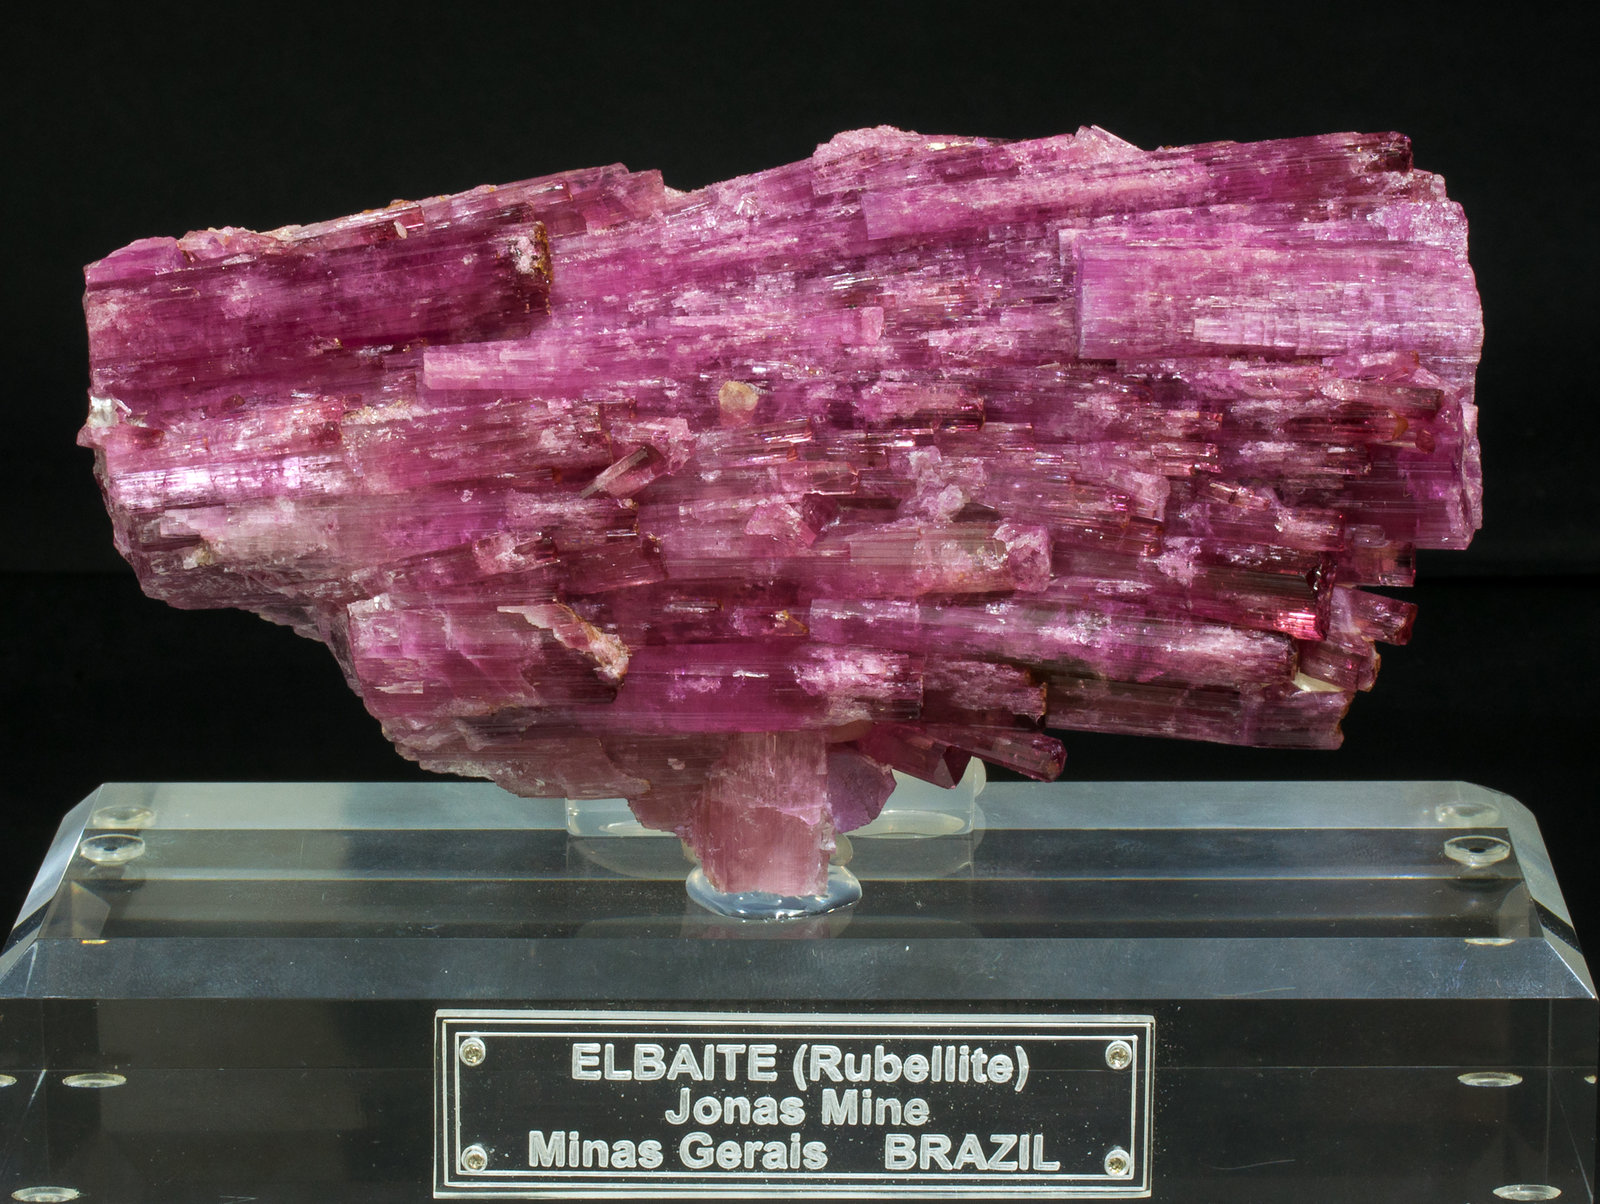 specimens/s_imagesZ0/Elbaite_rubellite-EA96Z0f.jpg